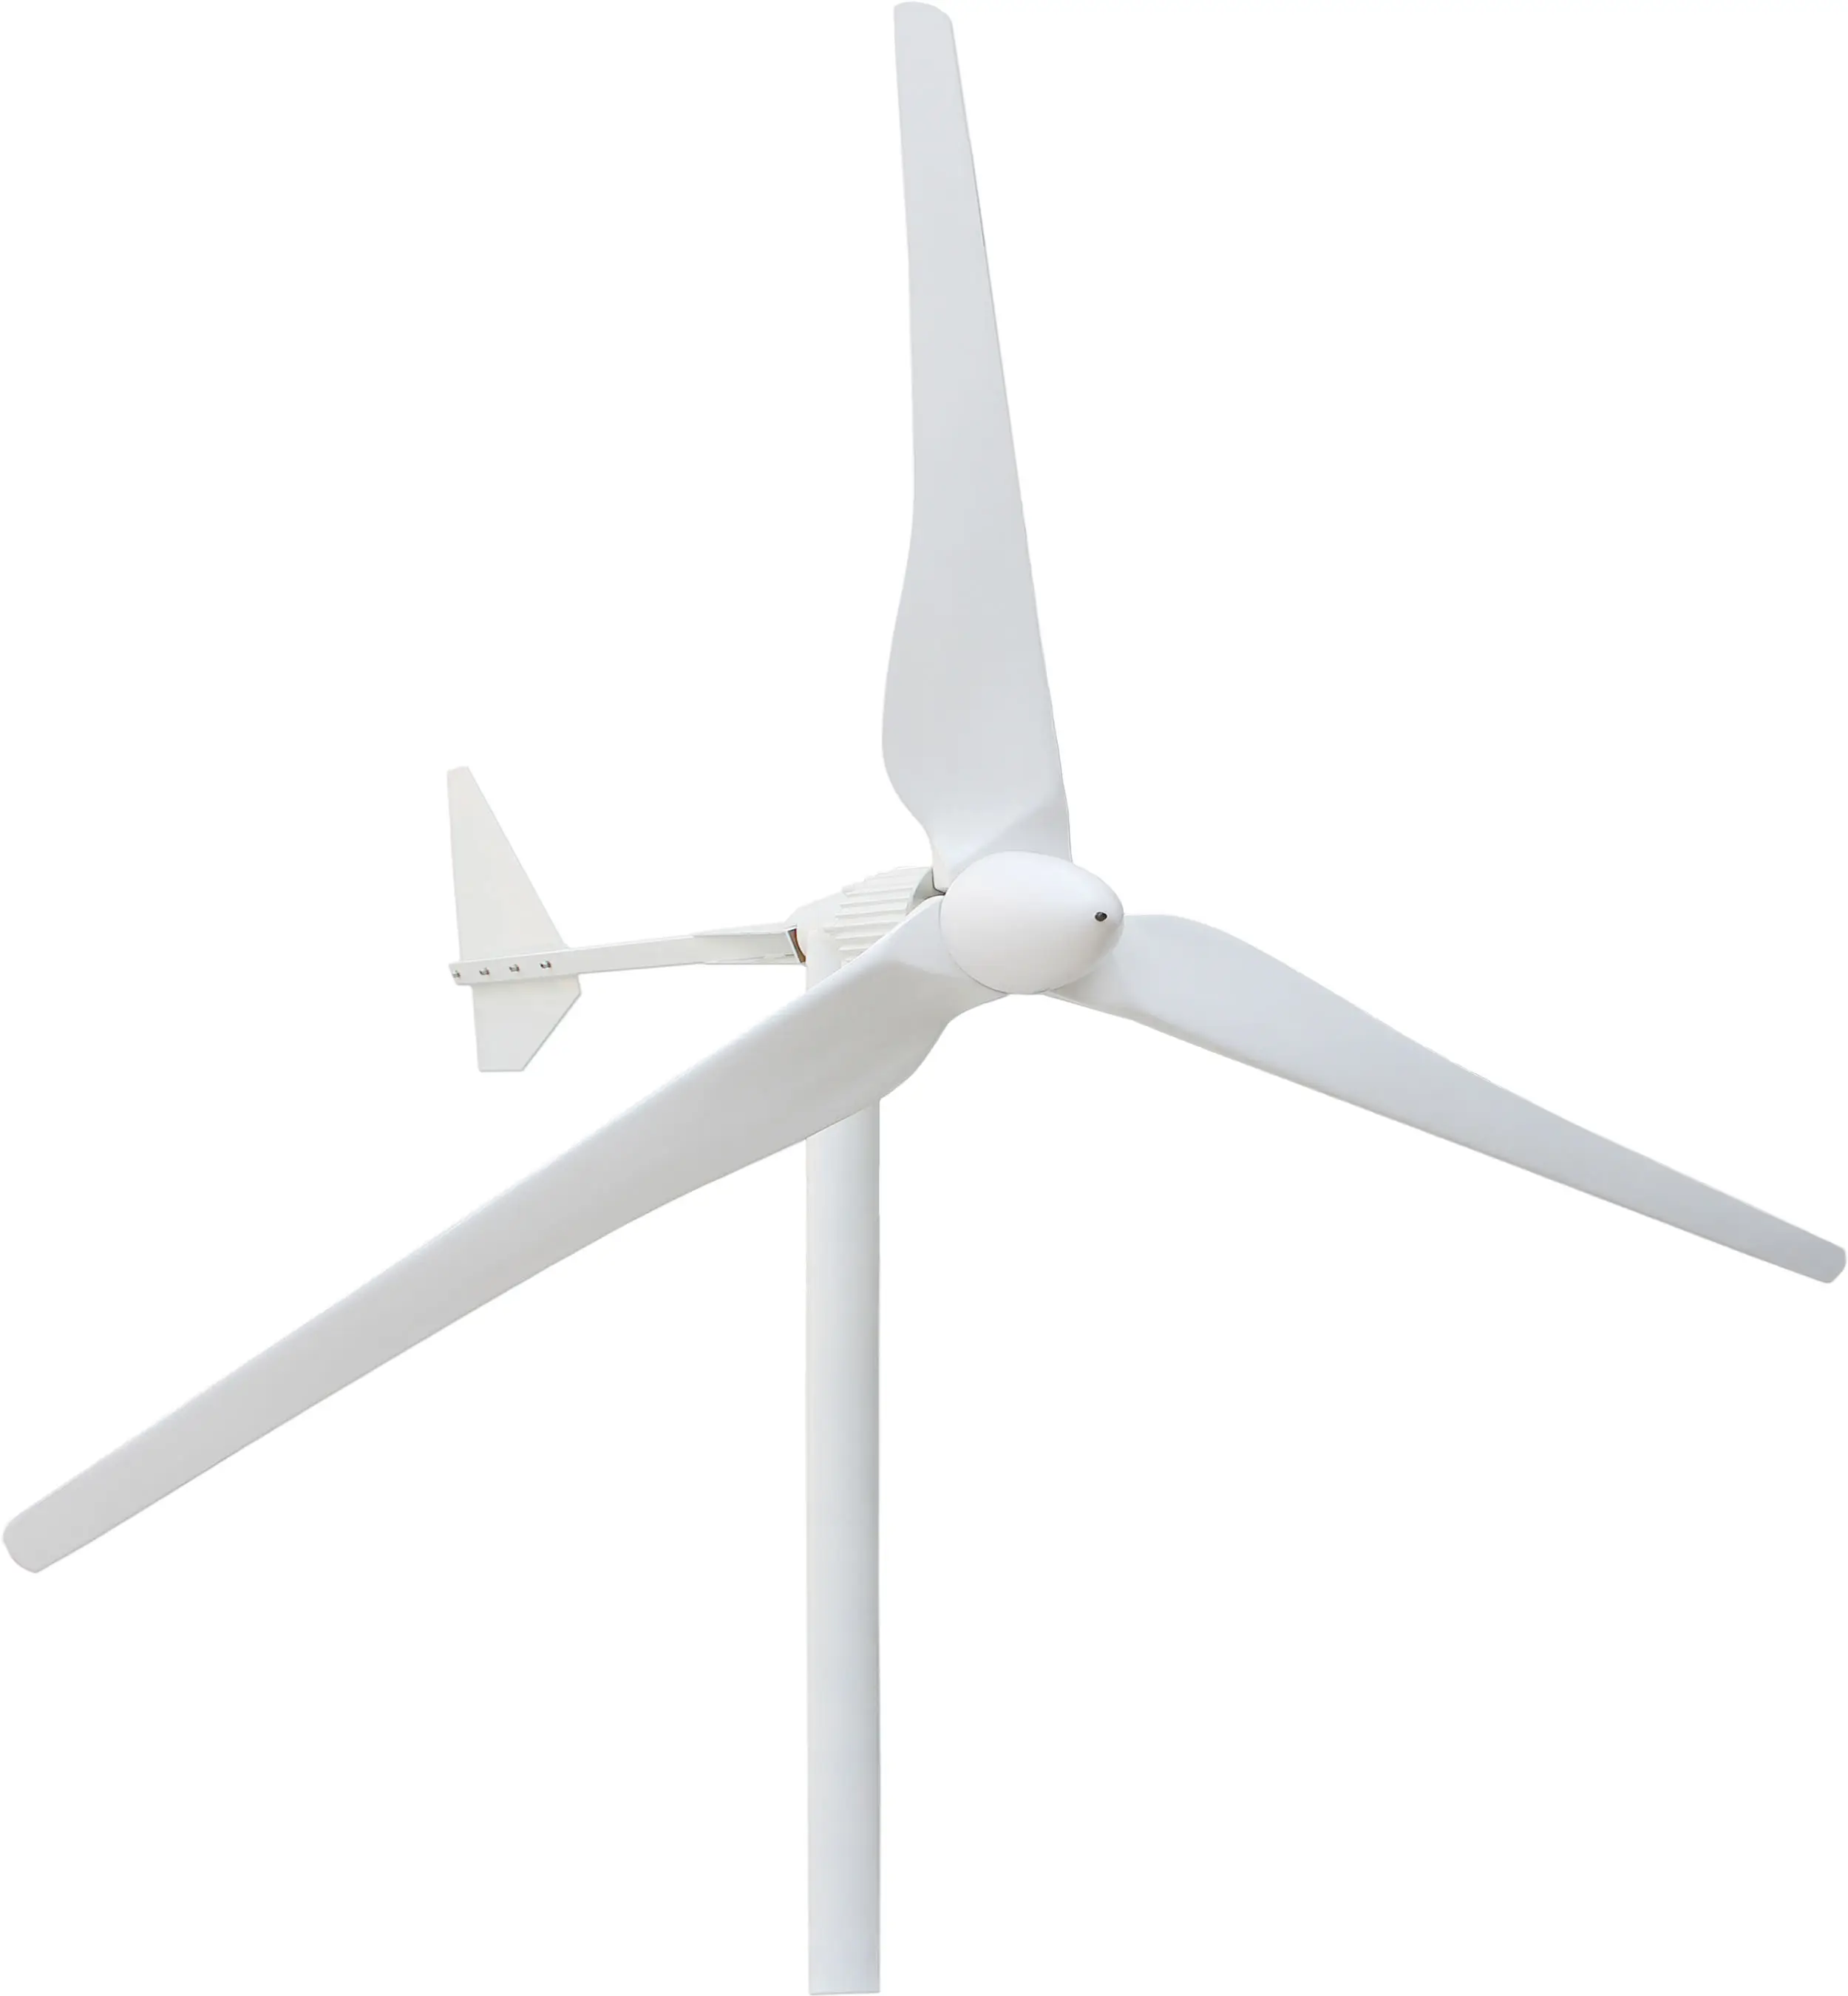 Vendita calda 3 anni 1.5mw-turbina eolica asse verticale 100kw generatore di turbina 5kw turbine eoliche residenziali per le vendite